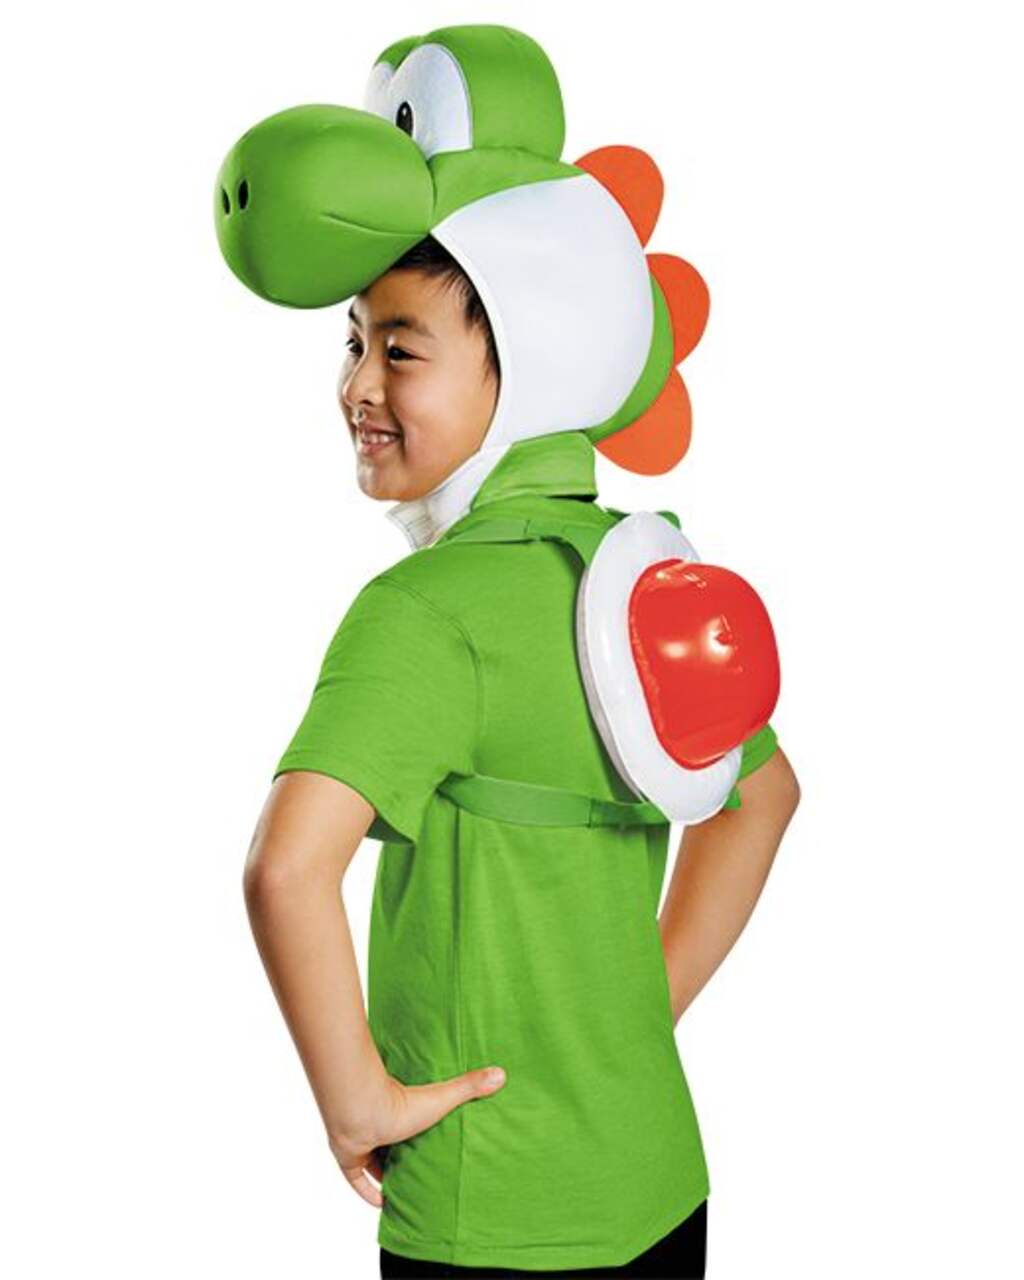 Accessoires déguisement Mario Bros 